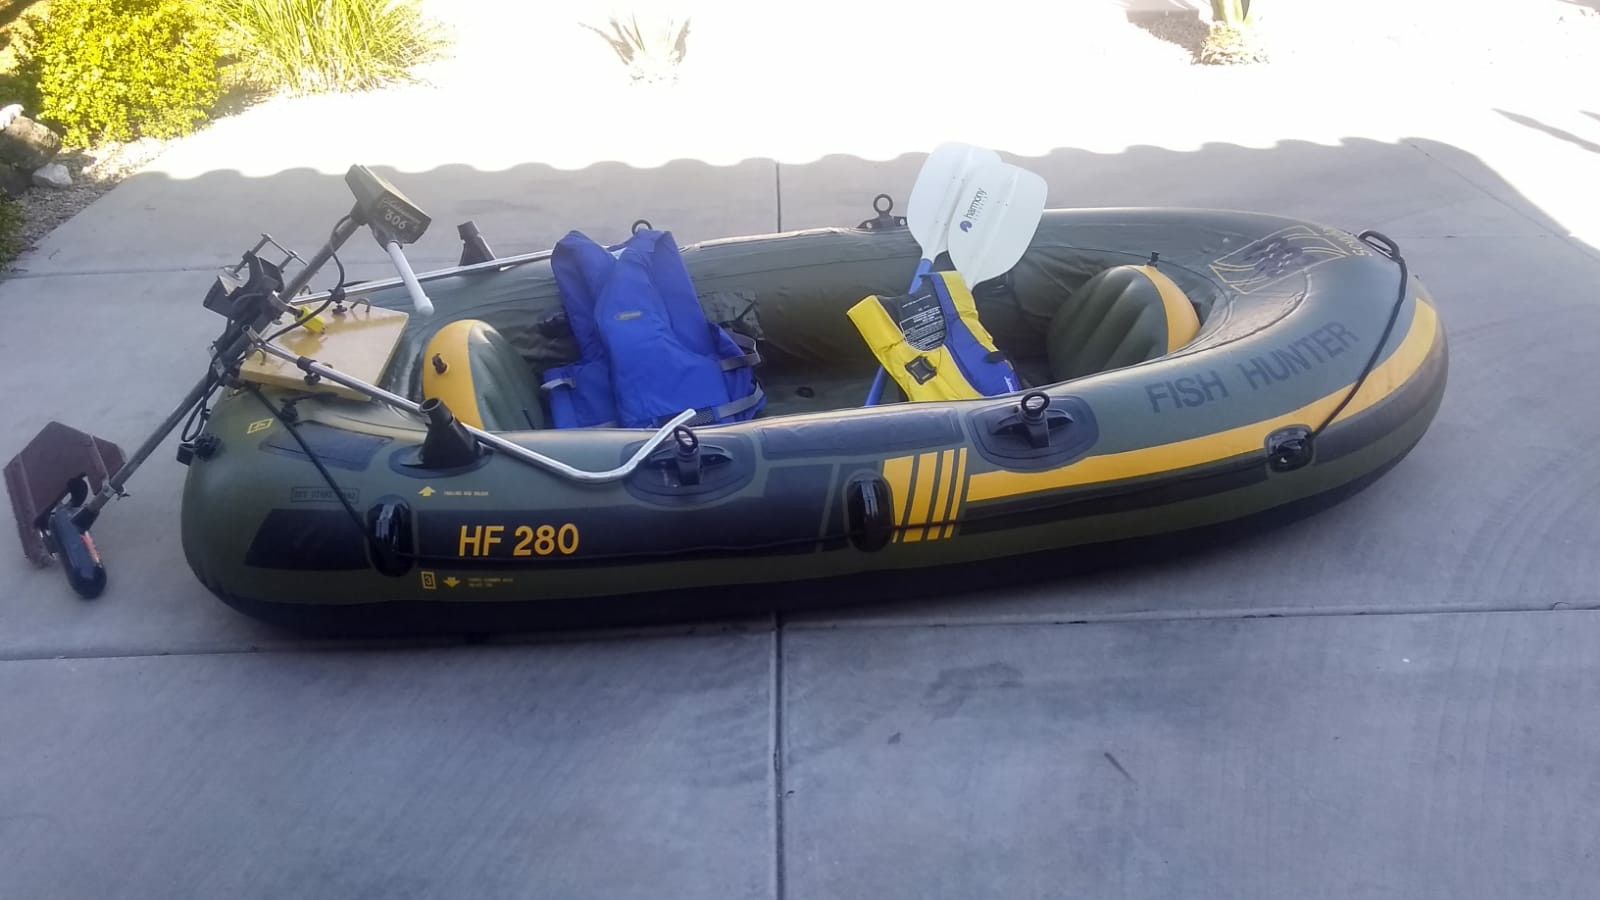 Sevylor Fish Hunter HF280 inflatable boat